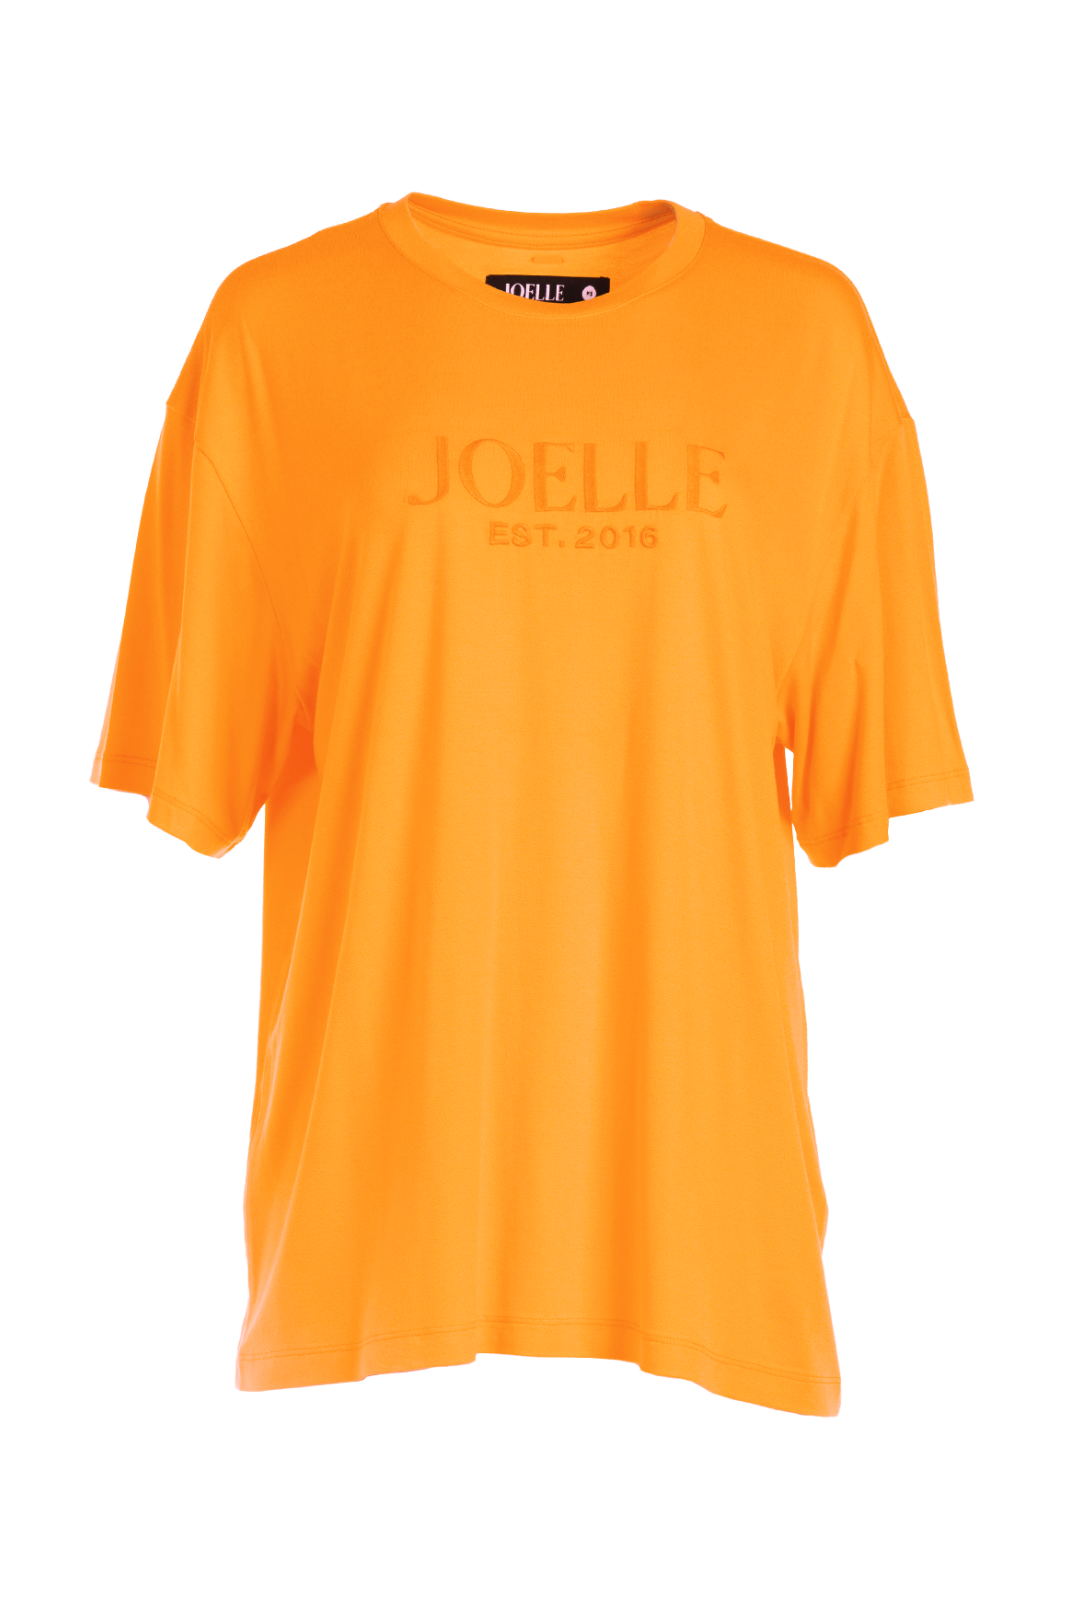 Loose orange t-shirt | Laurenzo